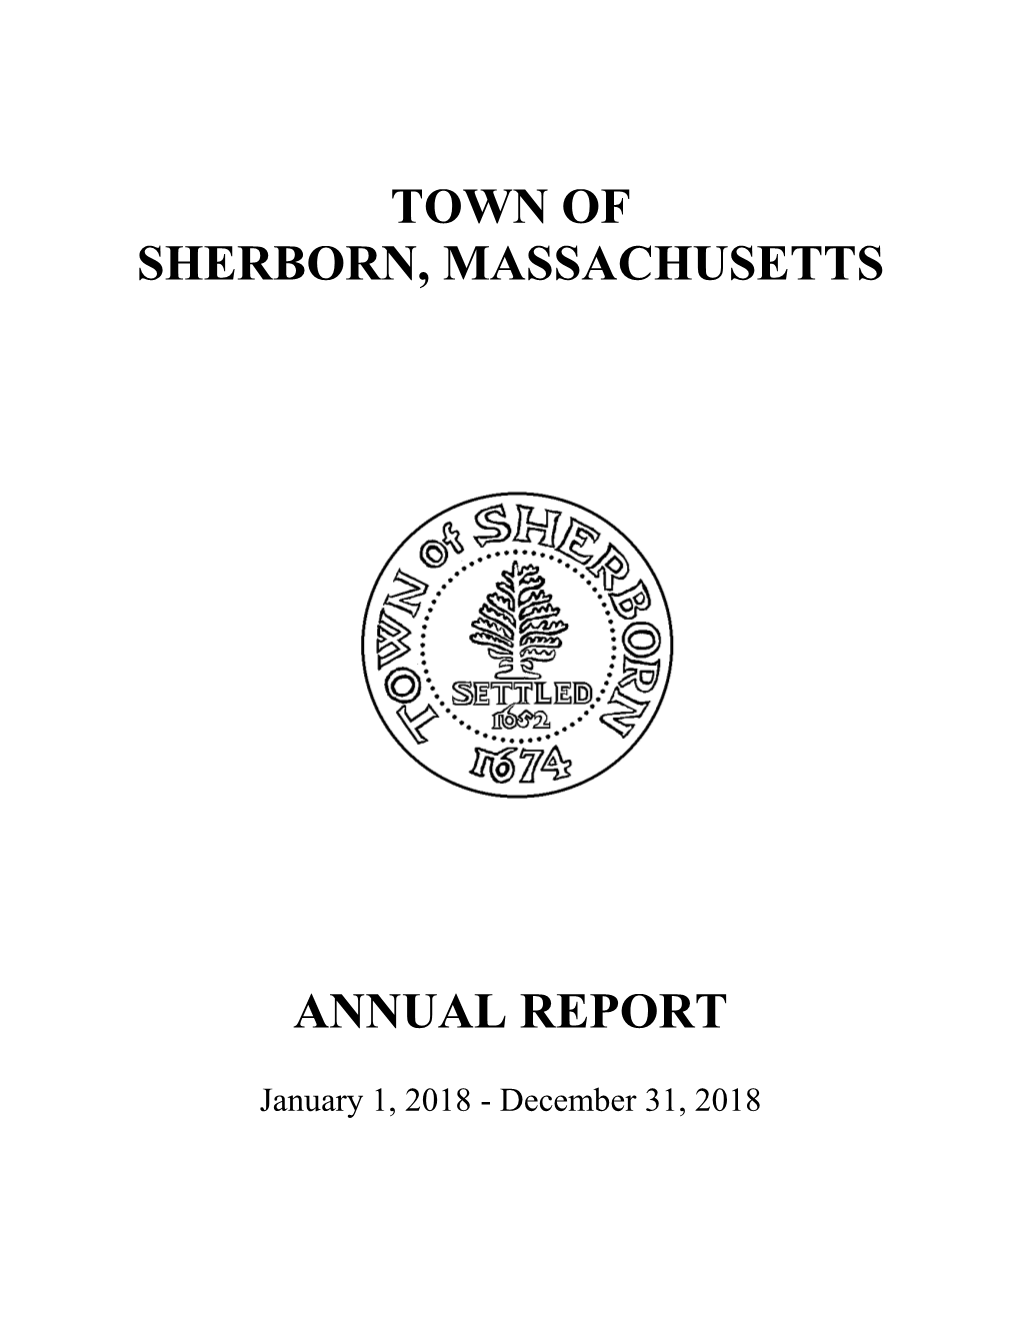 Town of Sherborn, Massachusetts Annual Report